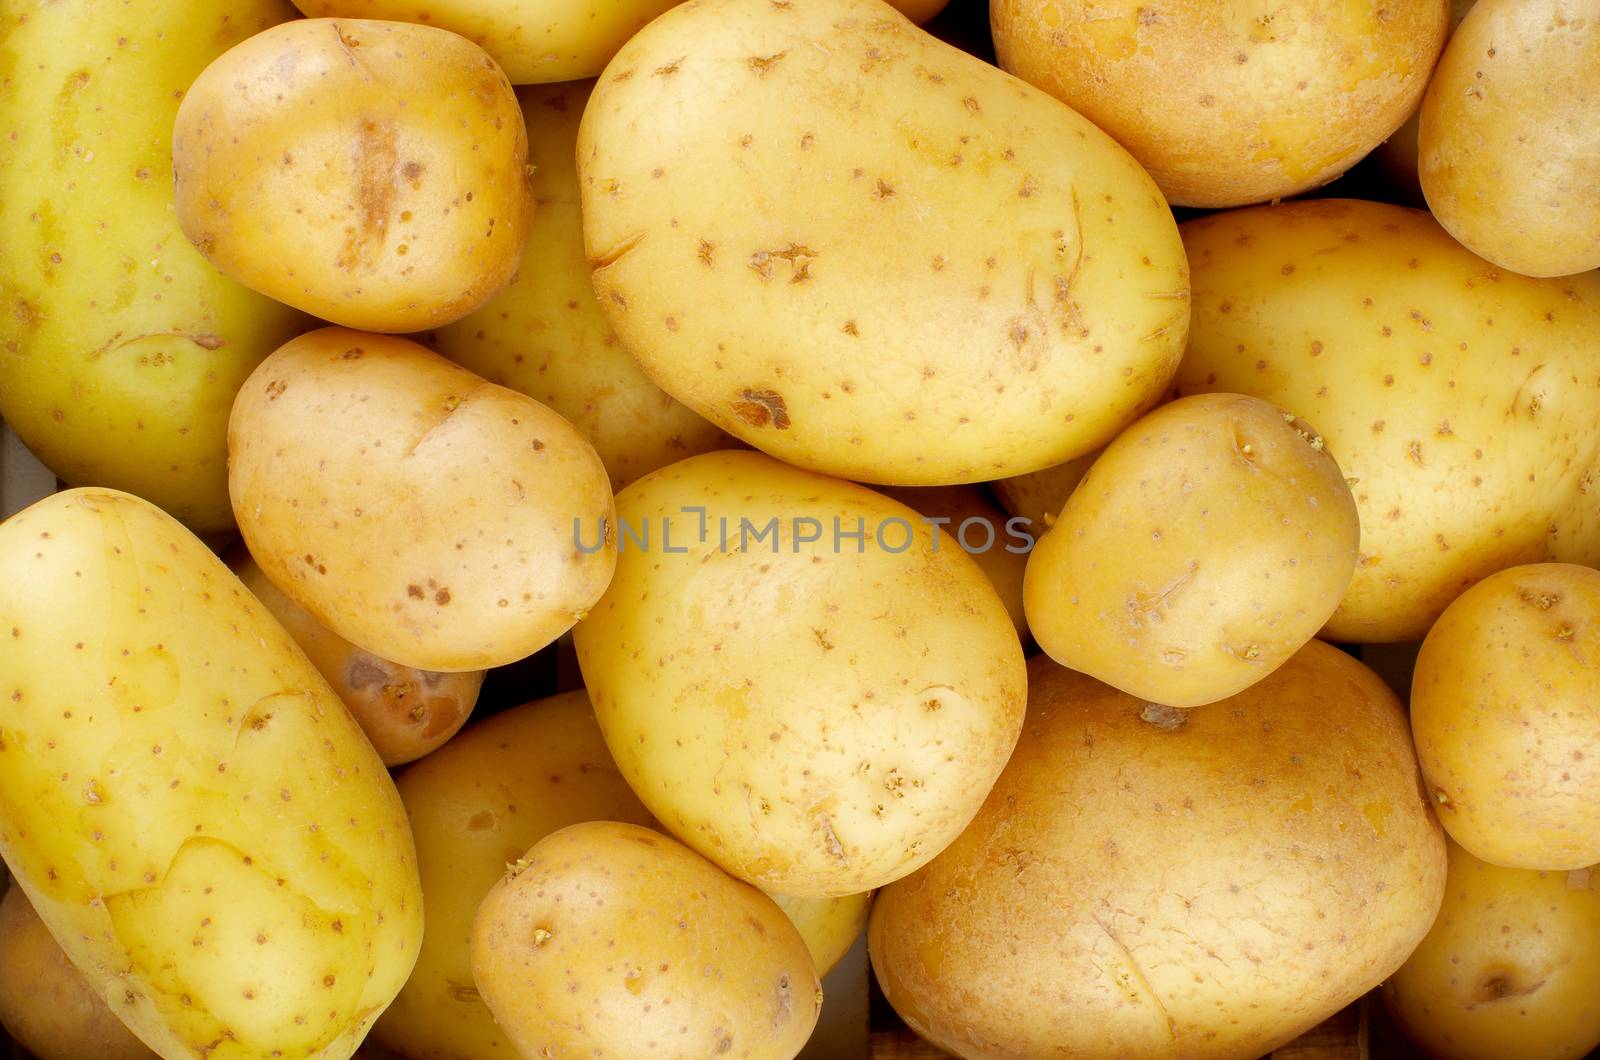 Background of Perfect Ripe Raw Yellow Potatoes Full Body closeup